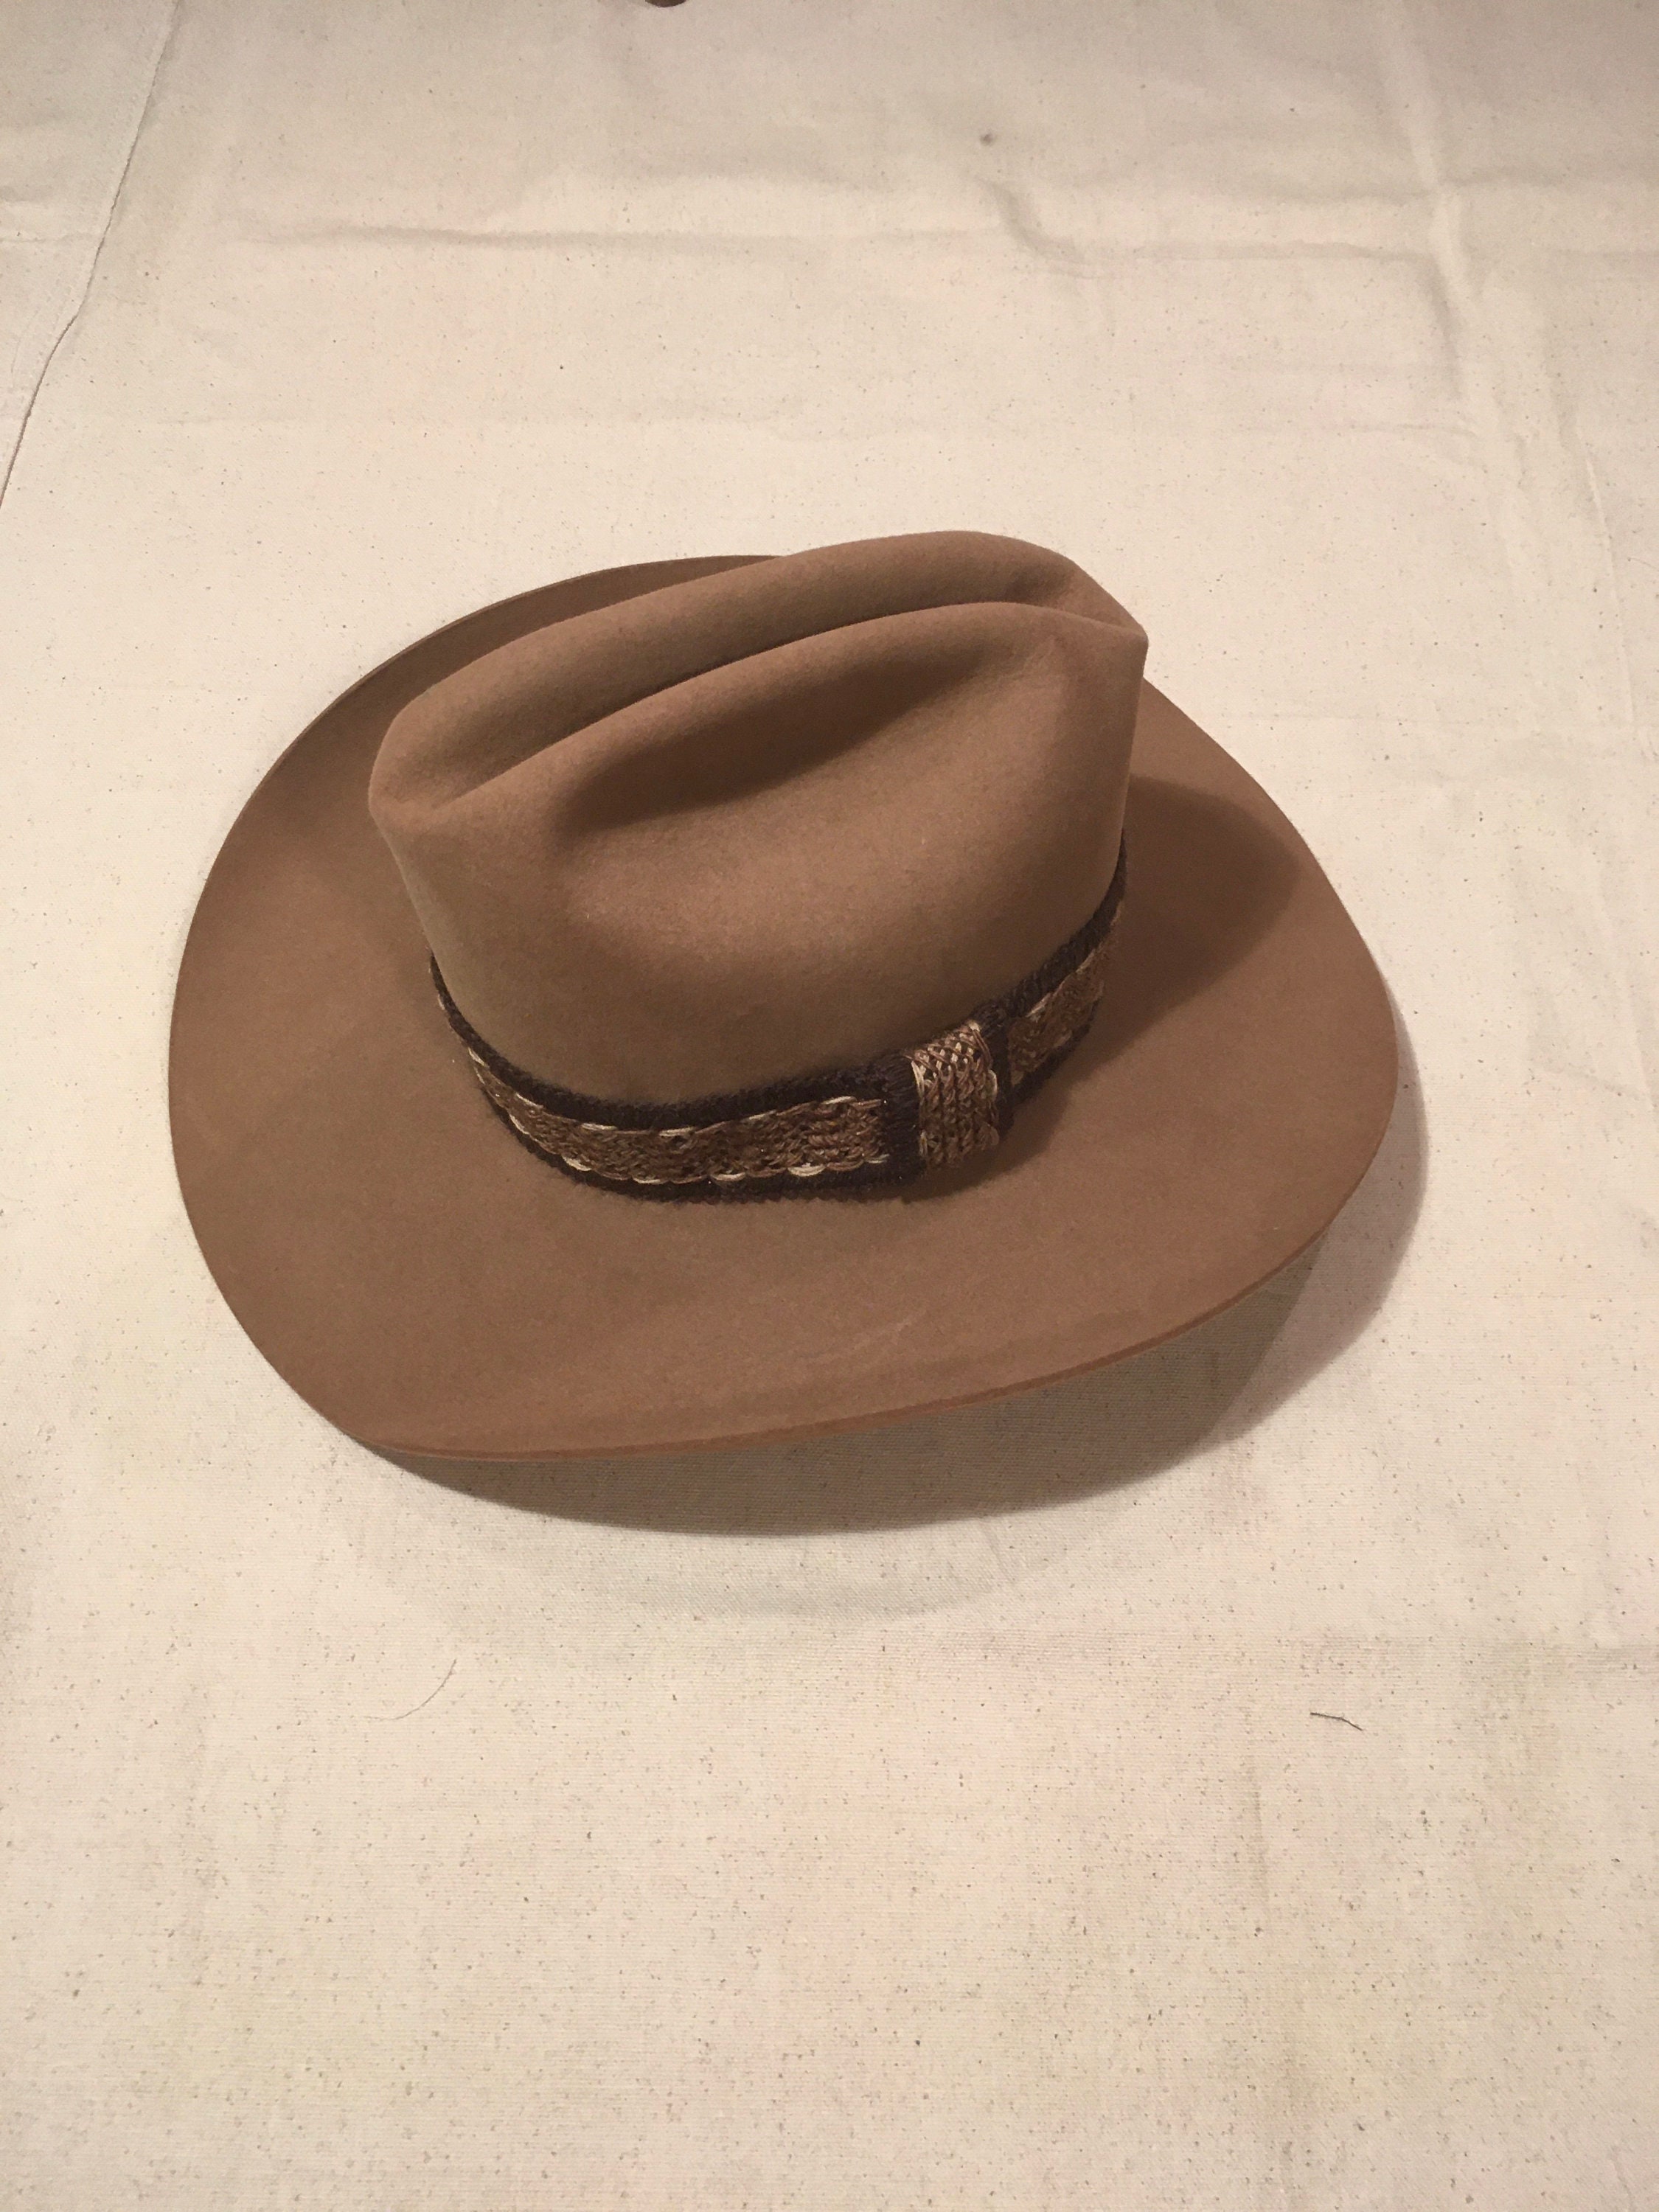 Vintage Resistol Stagecoach Self-Conforming Cowboy Hat with Hat